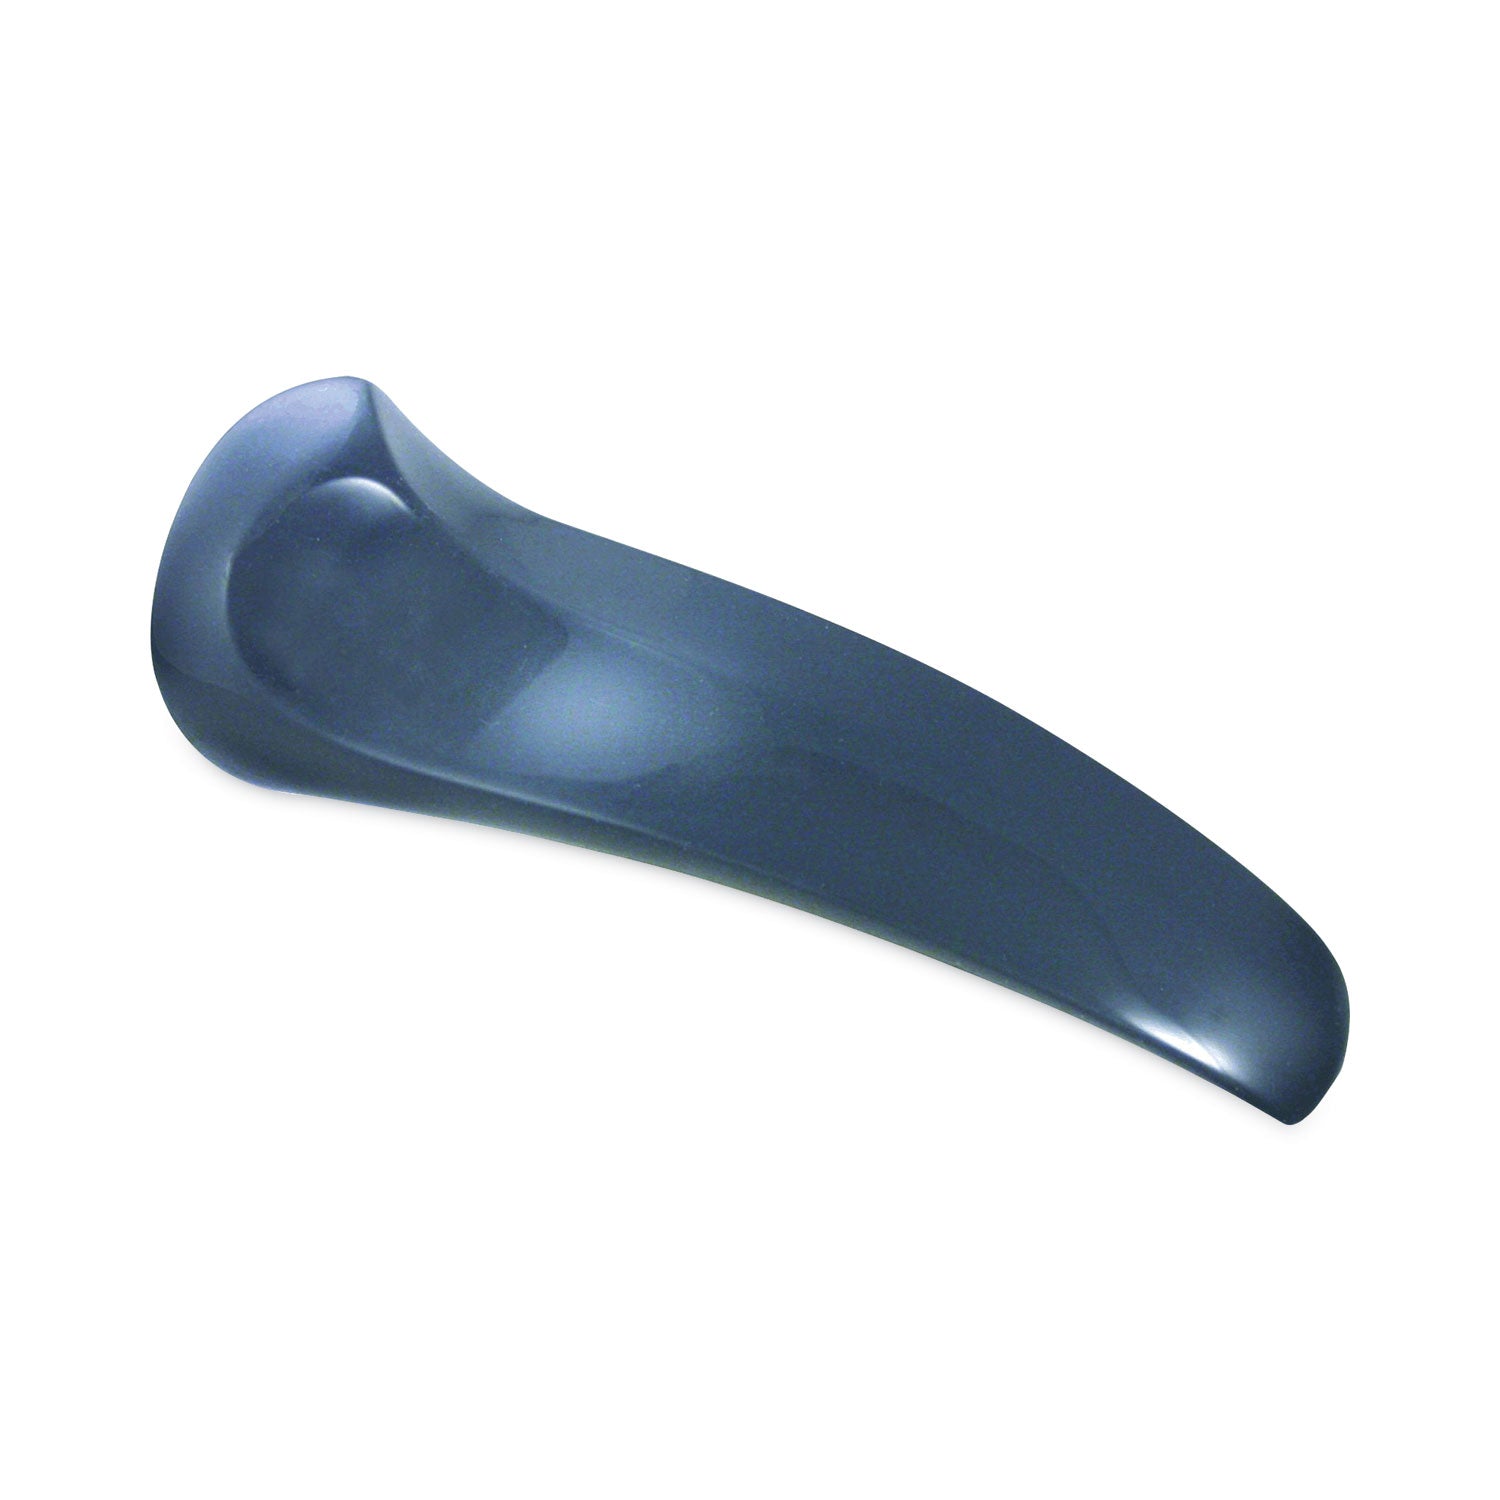 Softalk Standard Telephone Shoulder Rest, 2.63 x 7.5 x 2.25, Charcoal - 